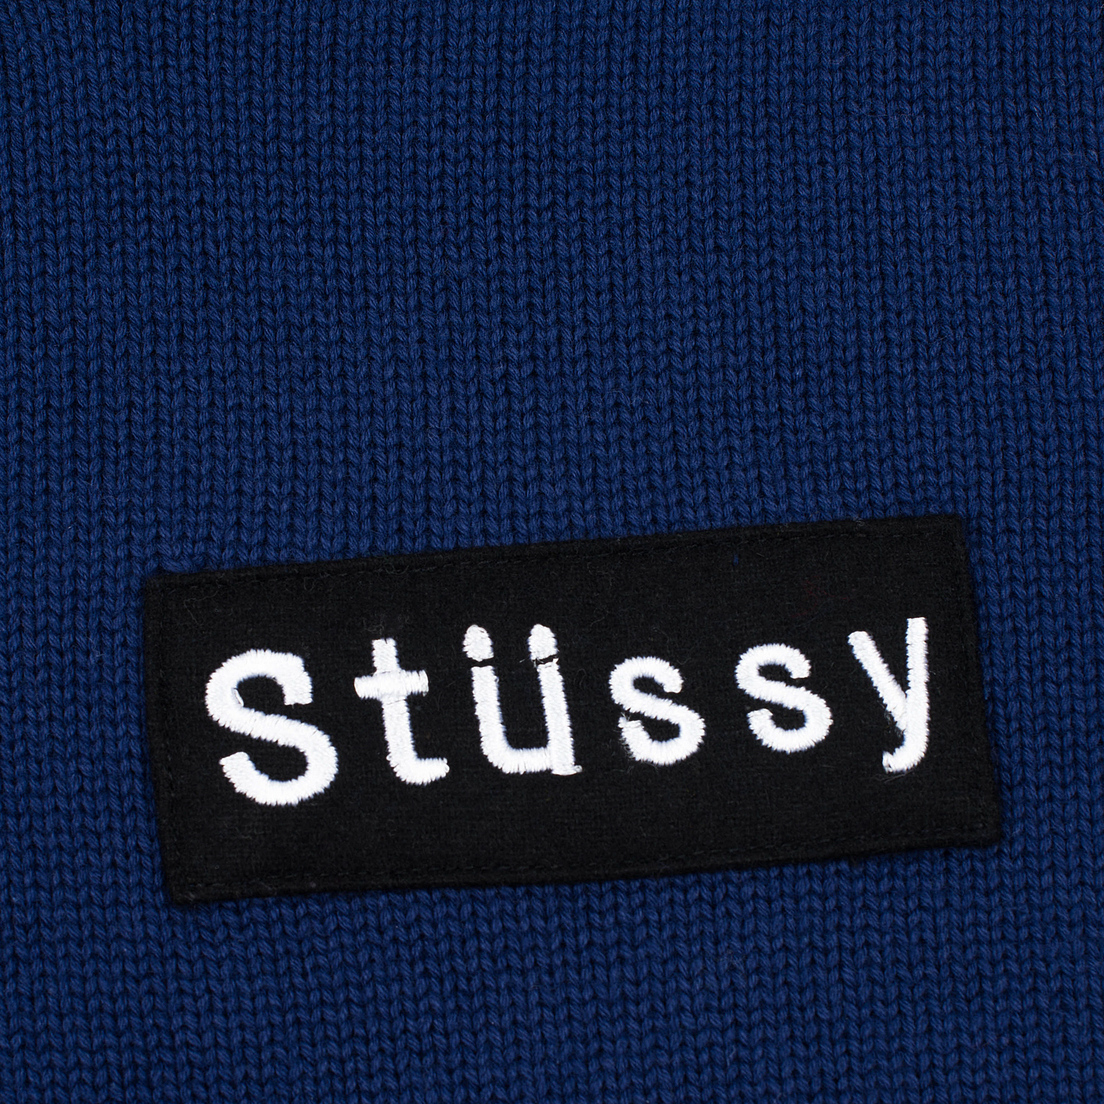 Stussy Женский свитер Diary